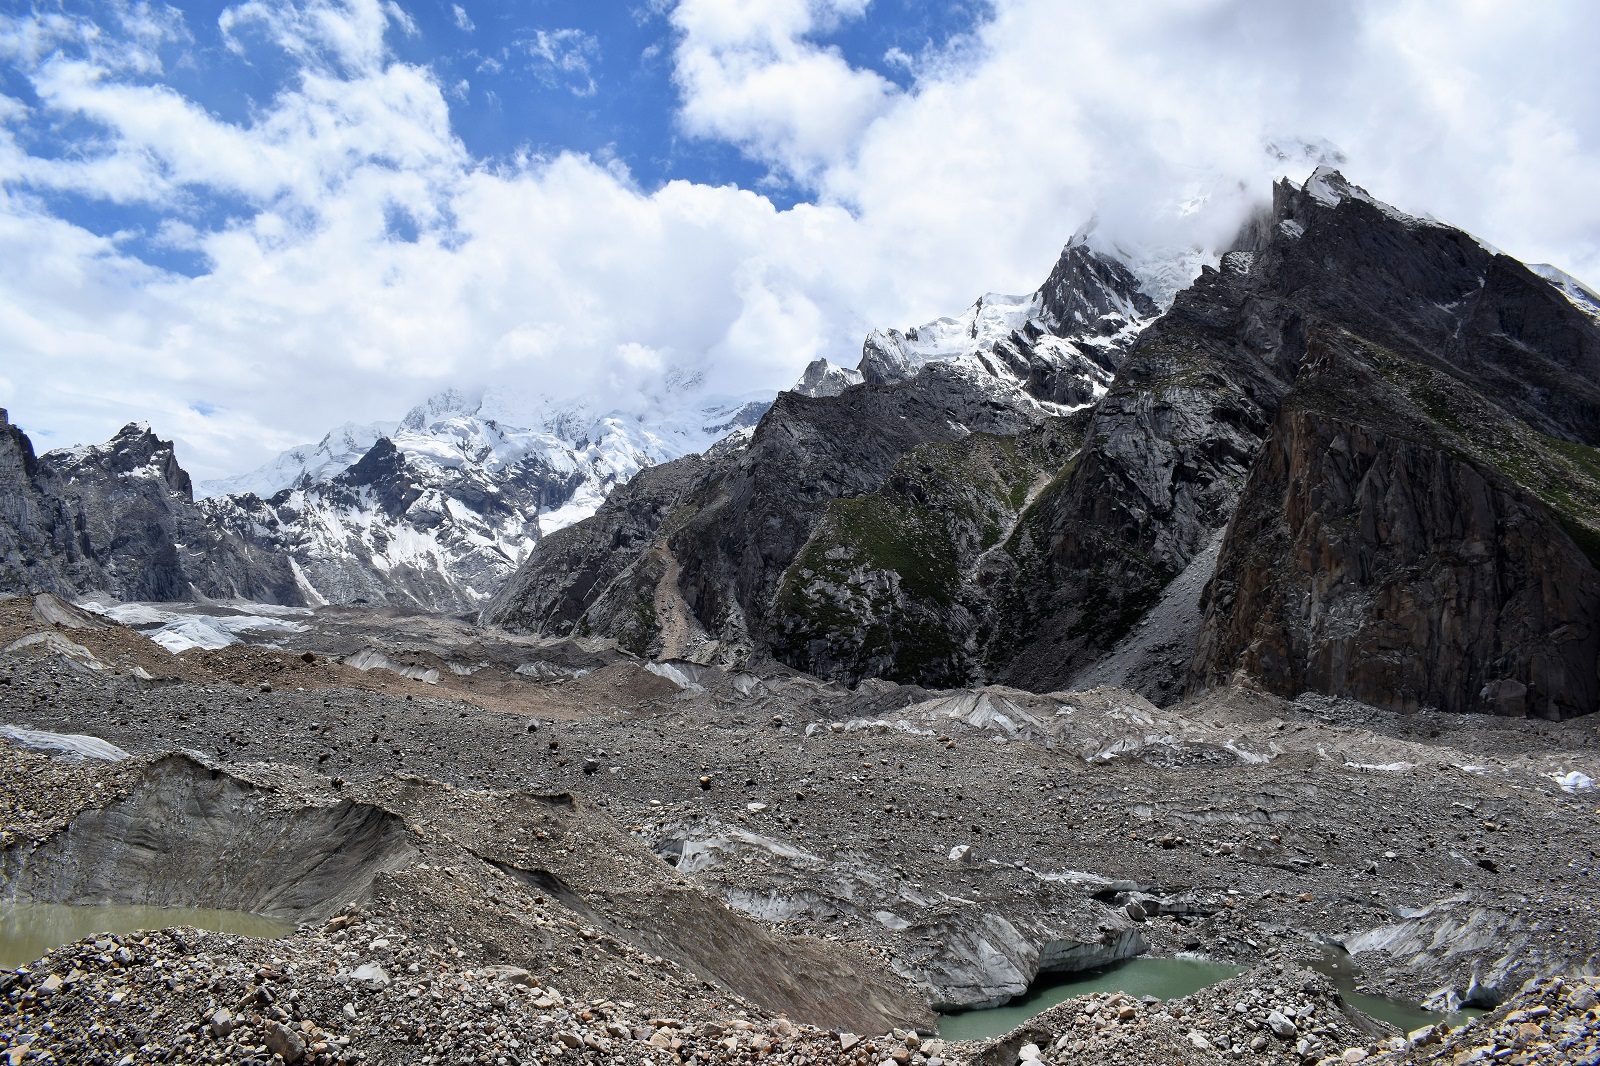 Trek k druhej najvyššej hore sveta K2 (8611) – najkrajšie fotografie